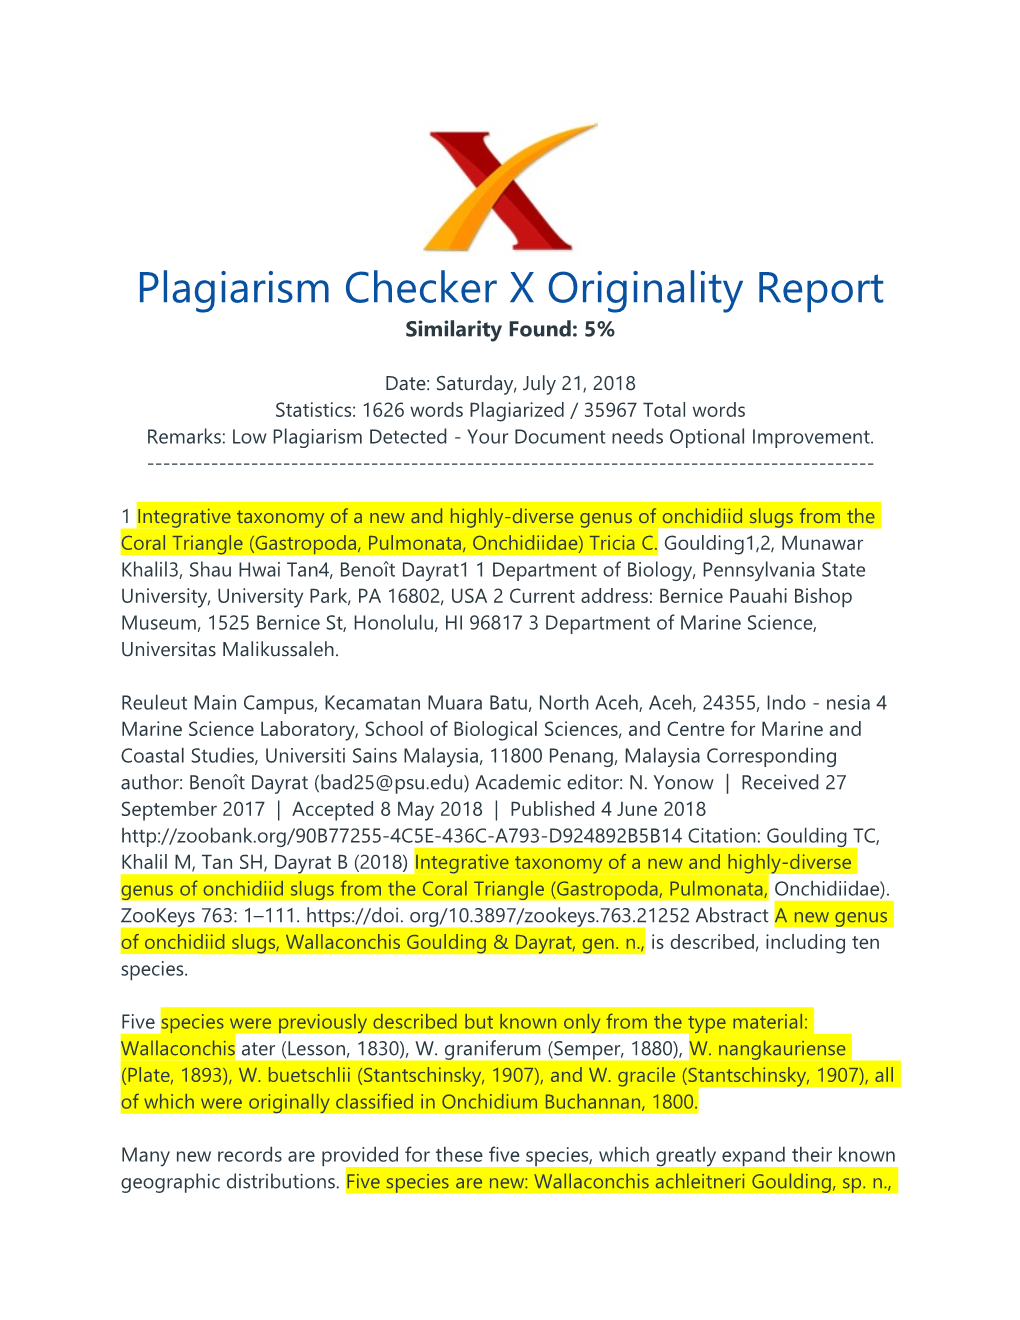 Plagiarism Checker X Originality Report Similarity Found: 5%